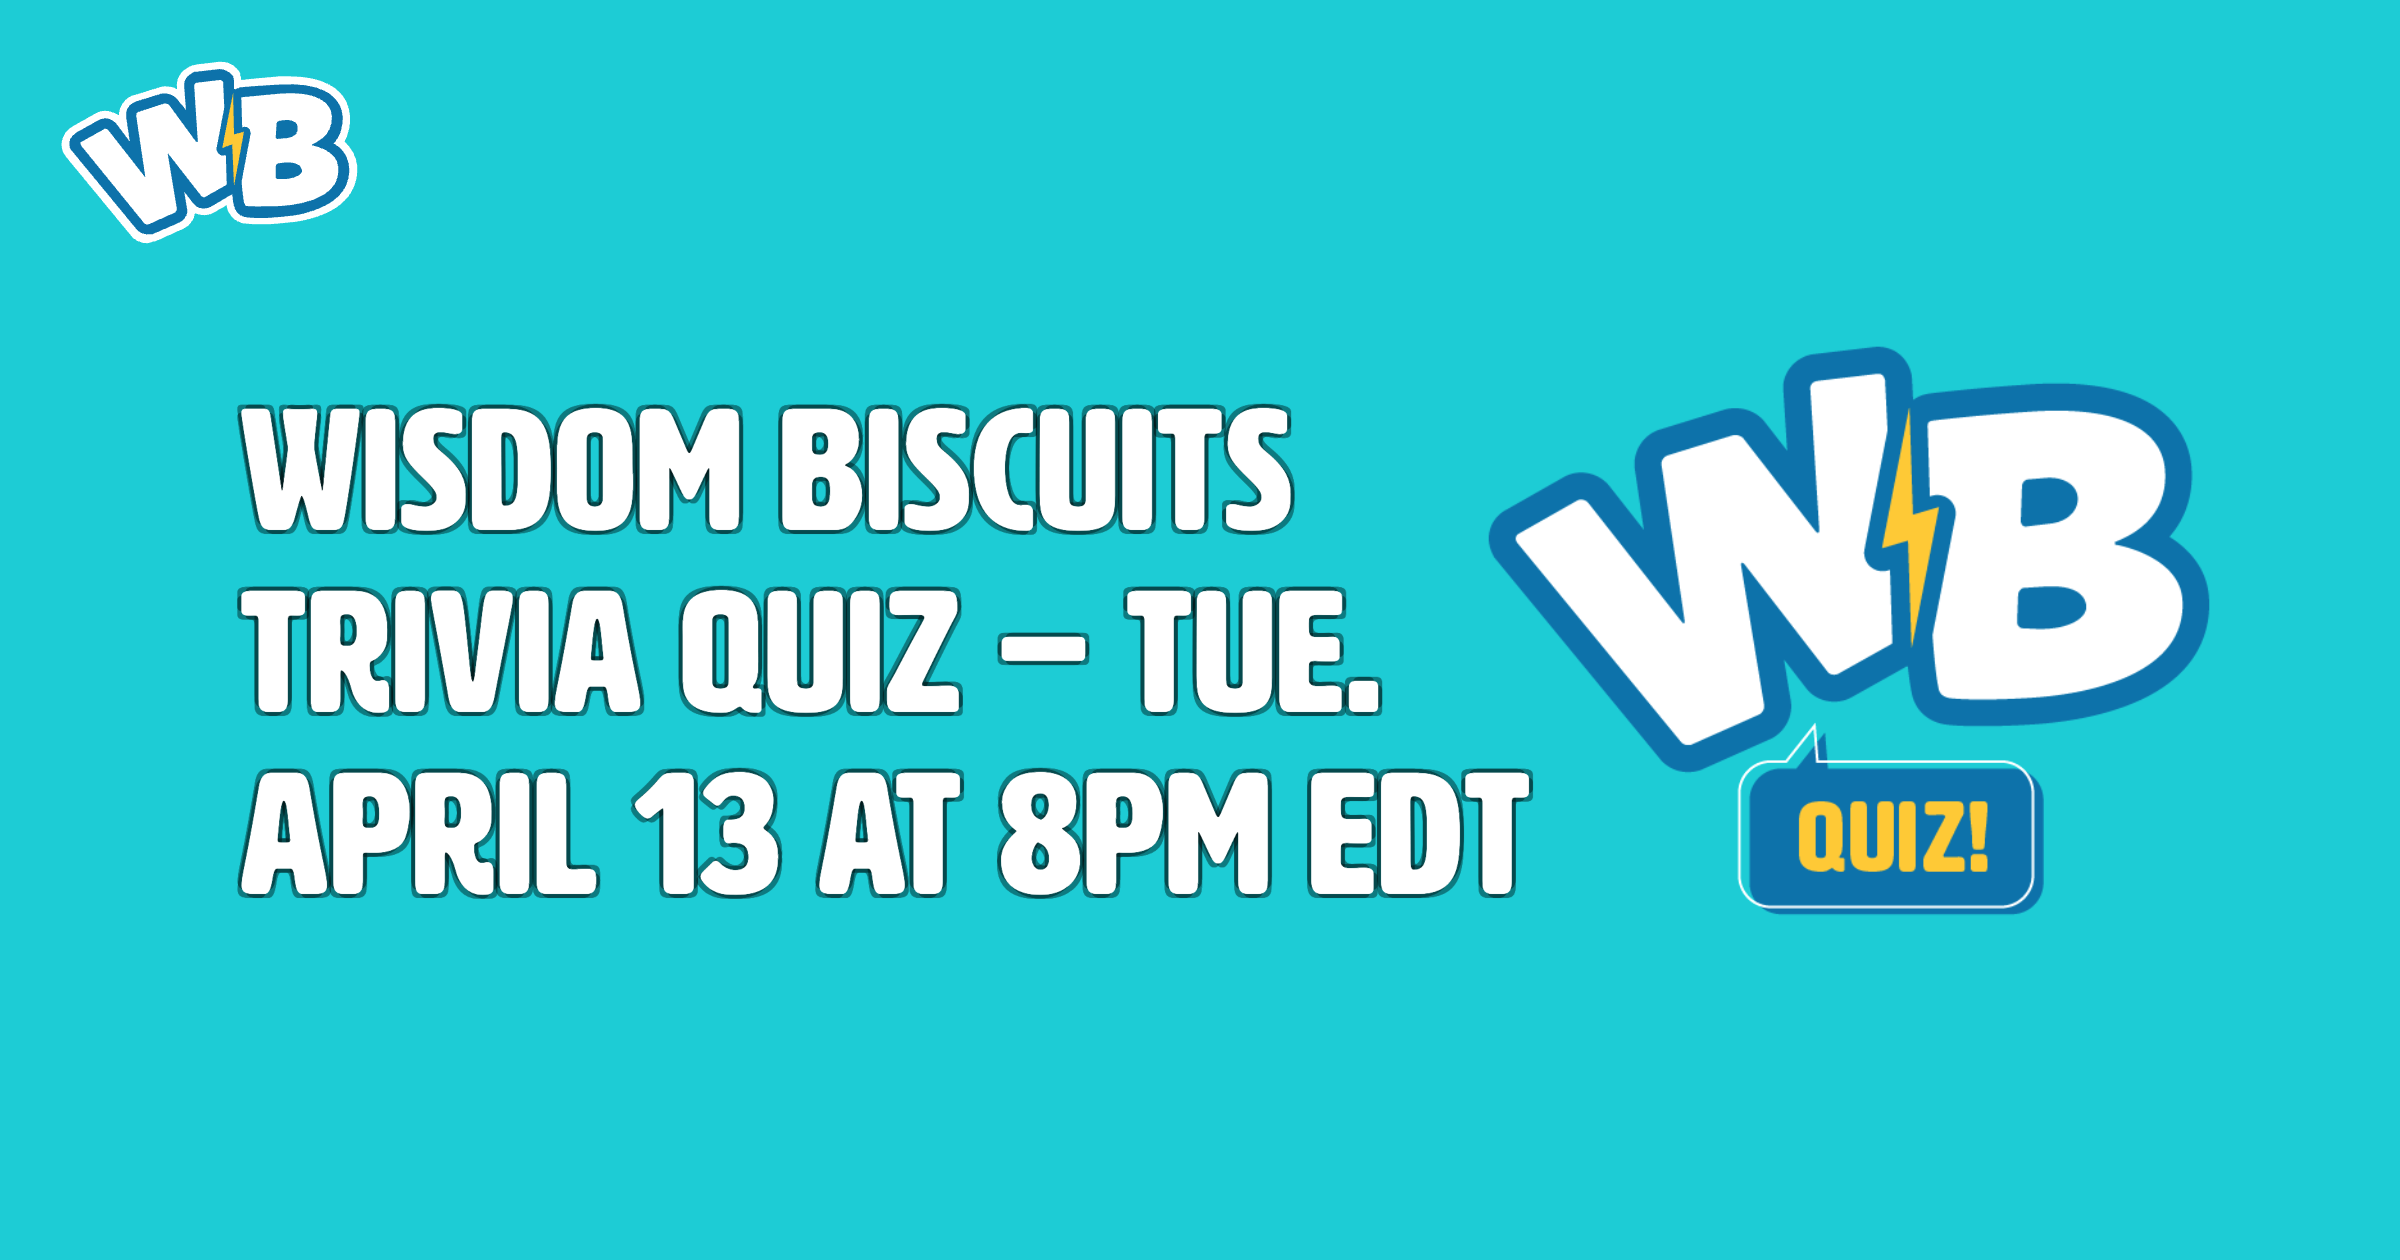 Wisdom Biscuits Trivia Quiz - Tue. April 13 at 8pm EDT